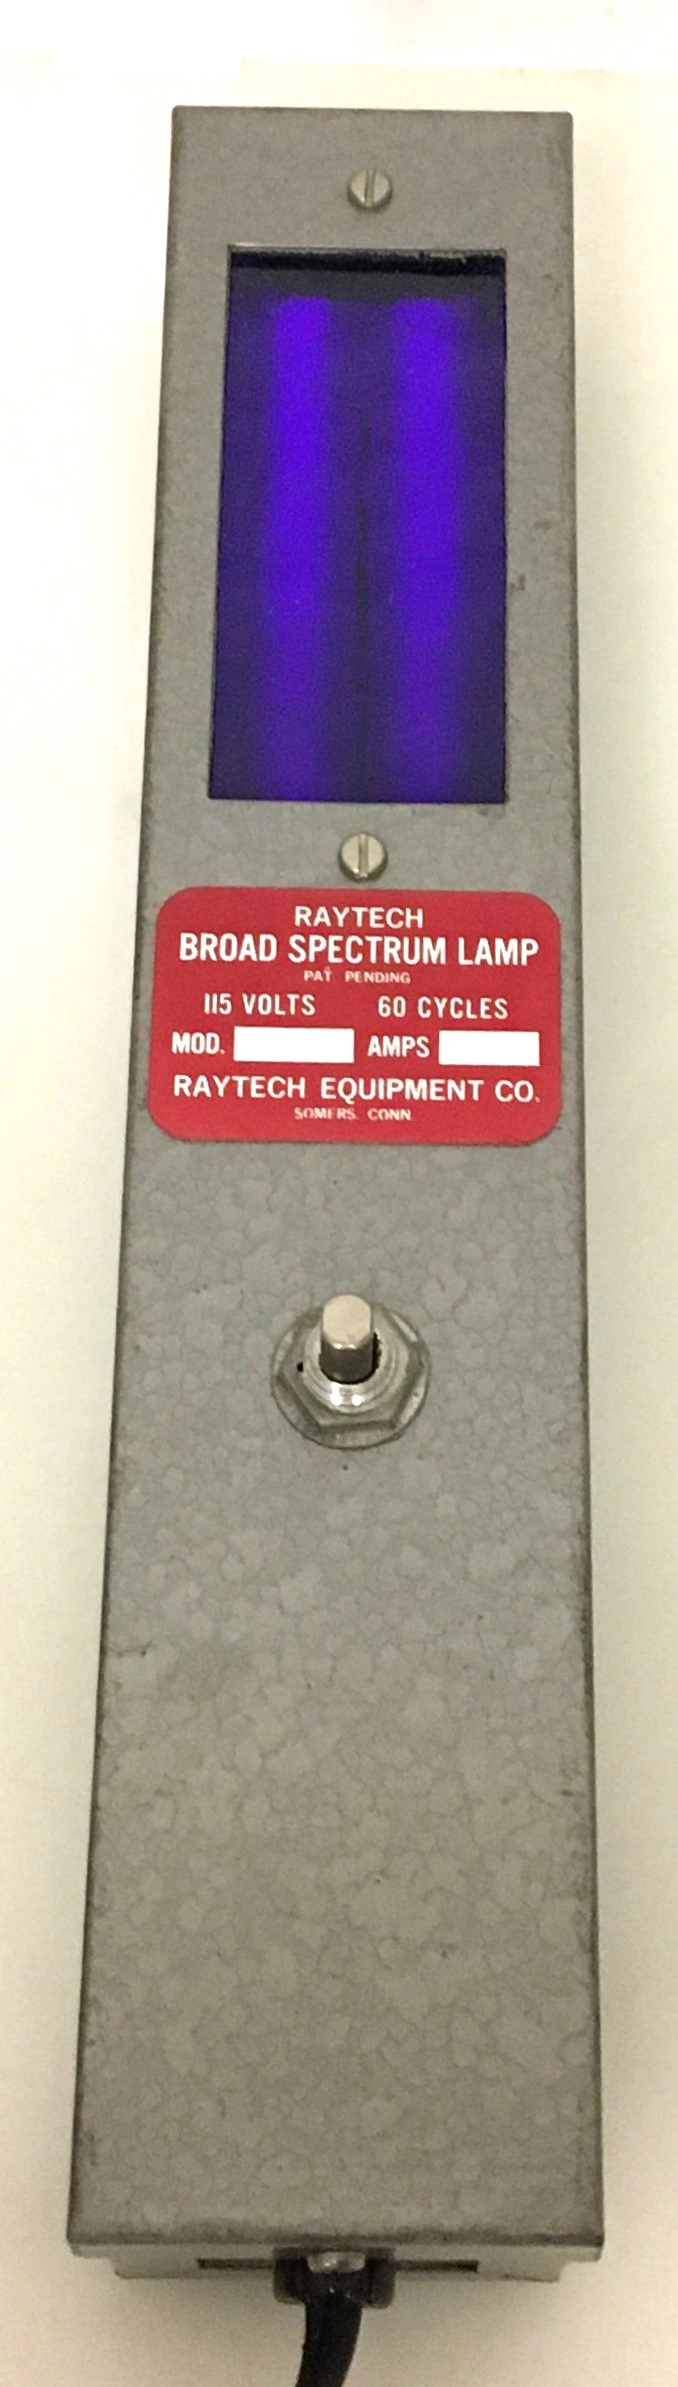 Raytech BS-5 Broad Spectrum Lamp